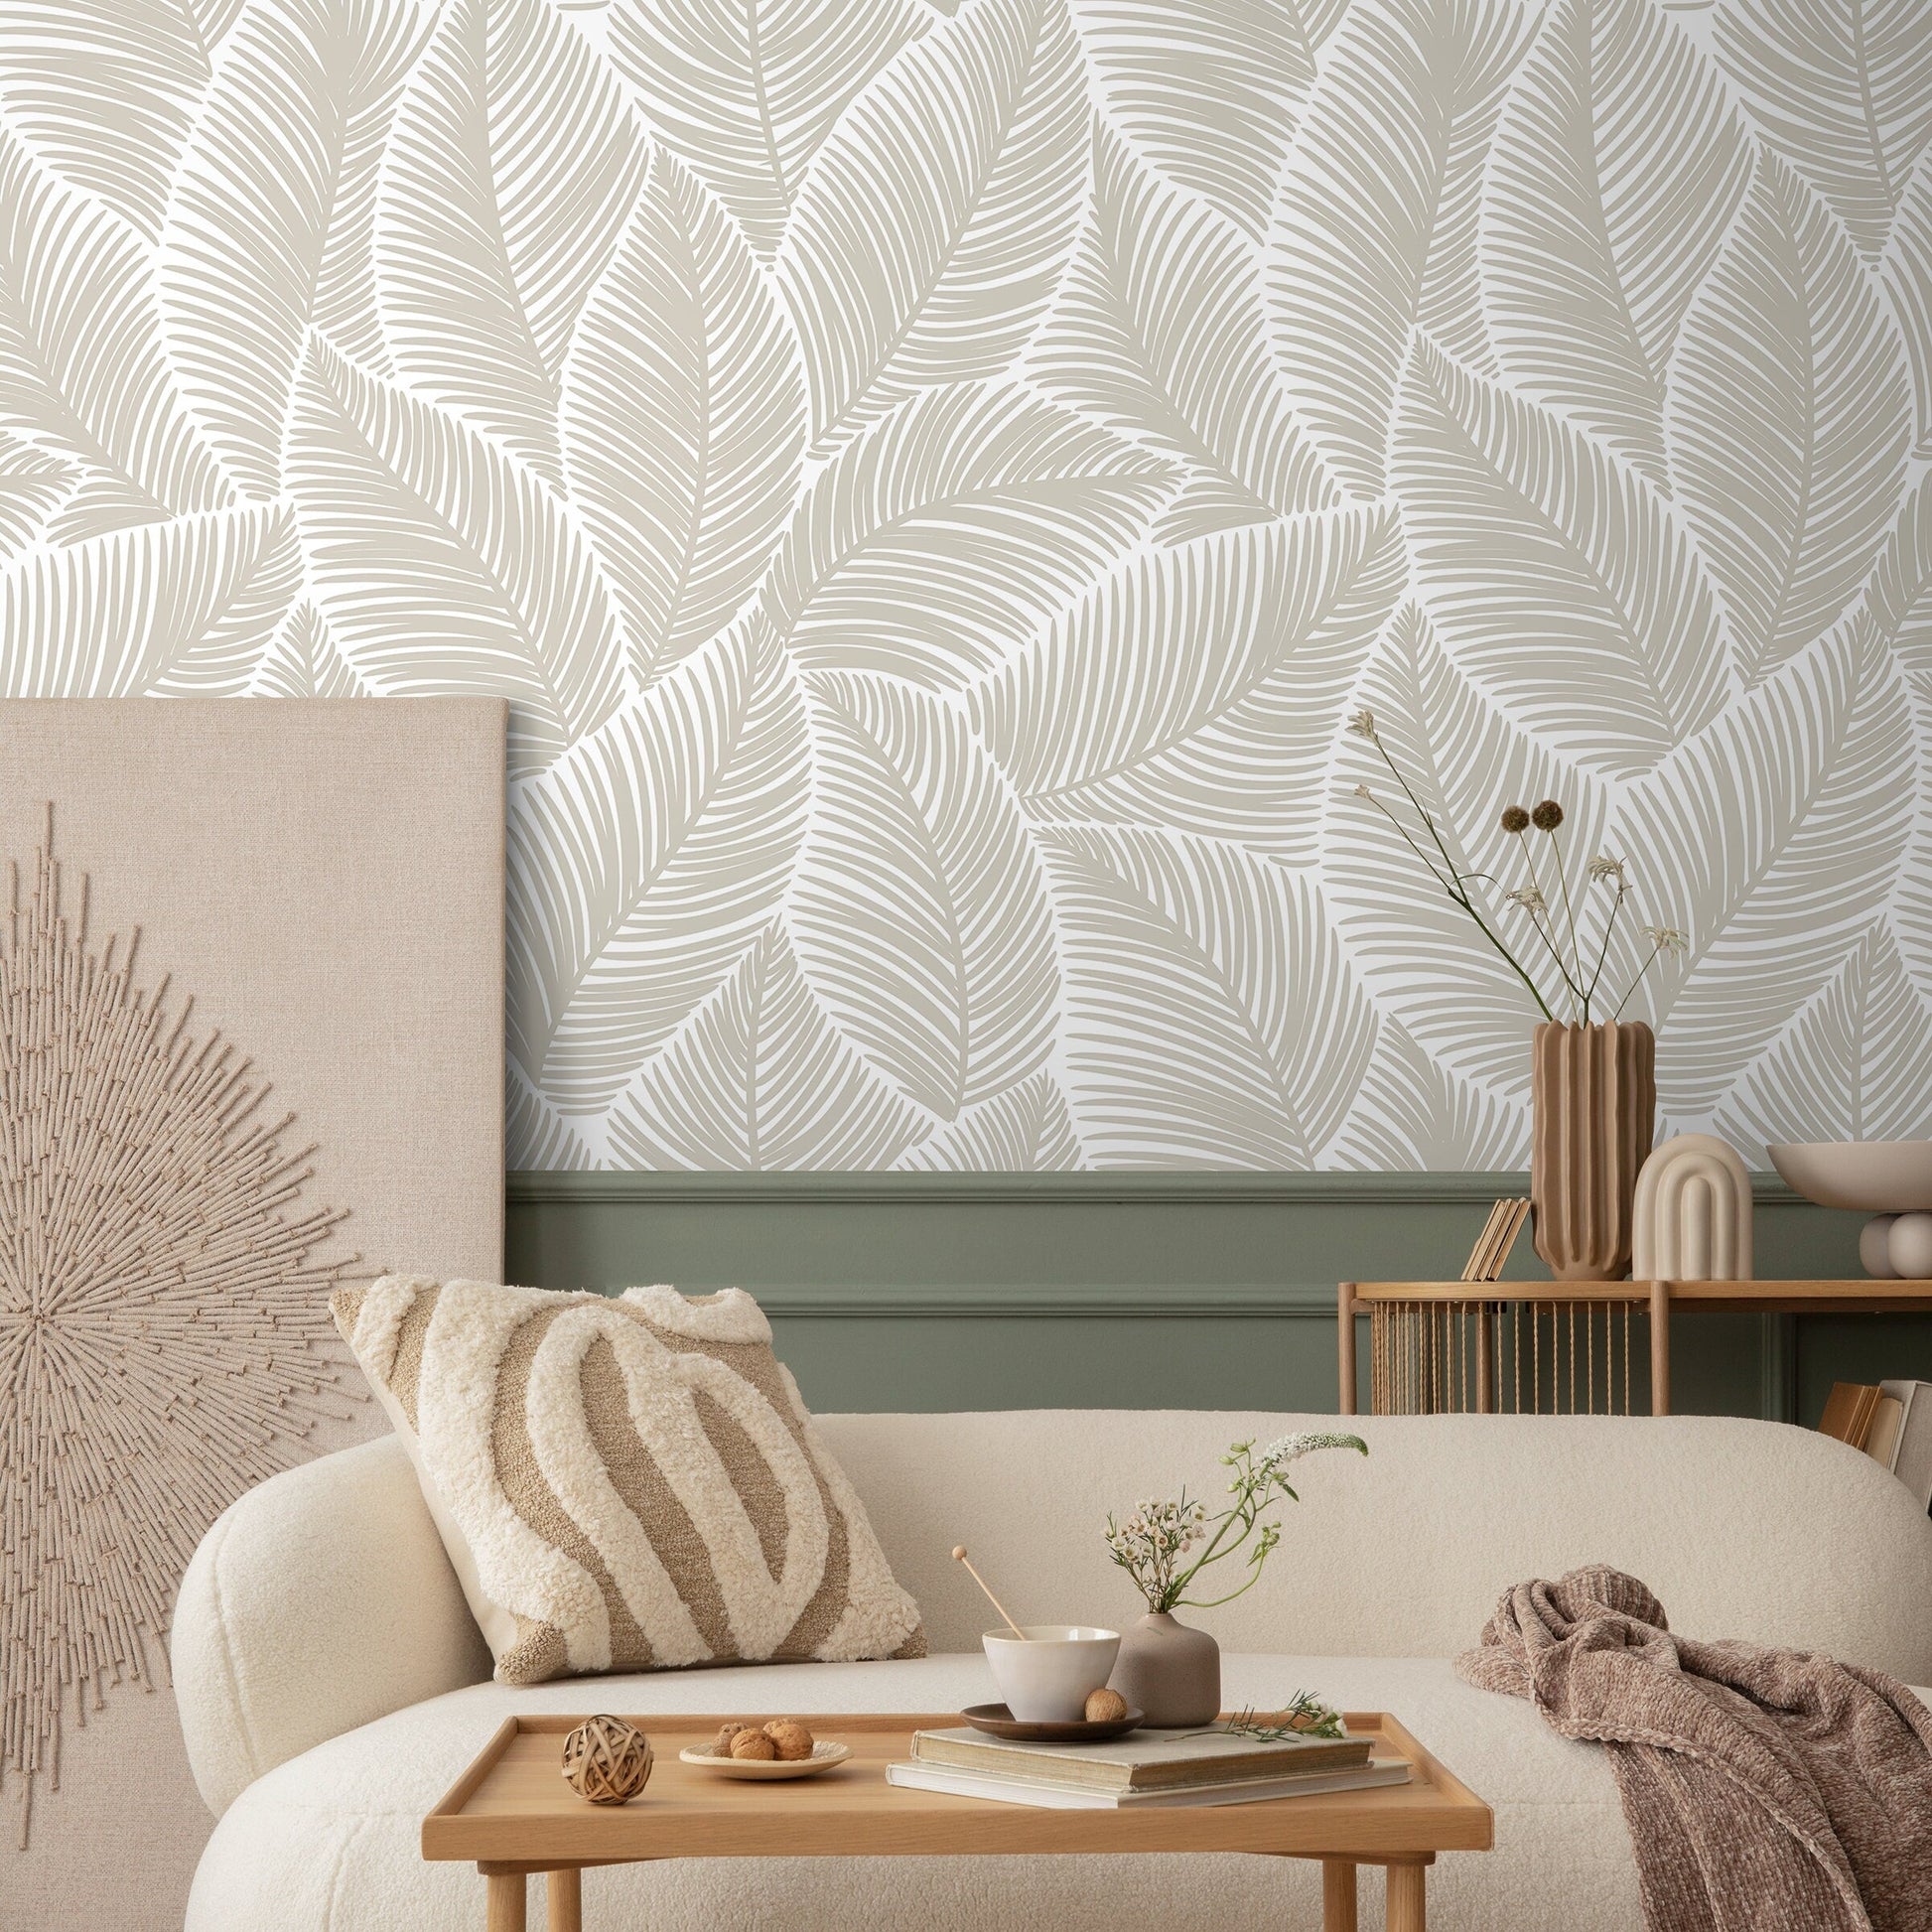 Removable Wallpaper, Scandinavian Wallpaper, Temporary Wallpaper, Minimalistic Wallpaper, Peel and Stick Wallpaper, Leaf Wallpaper - B521